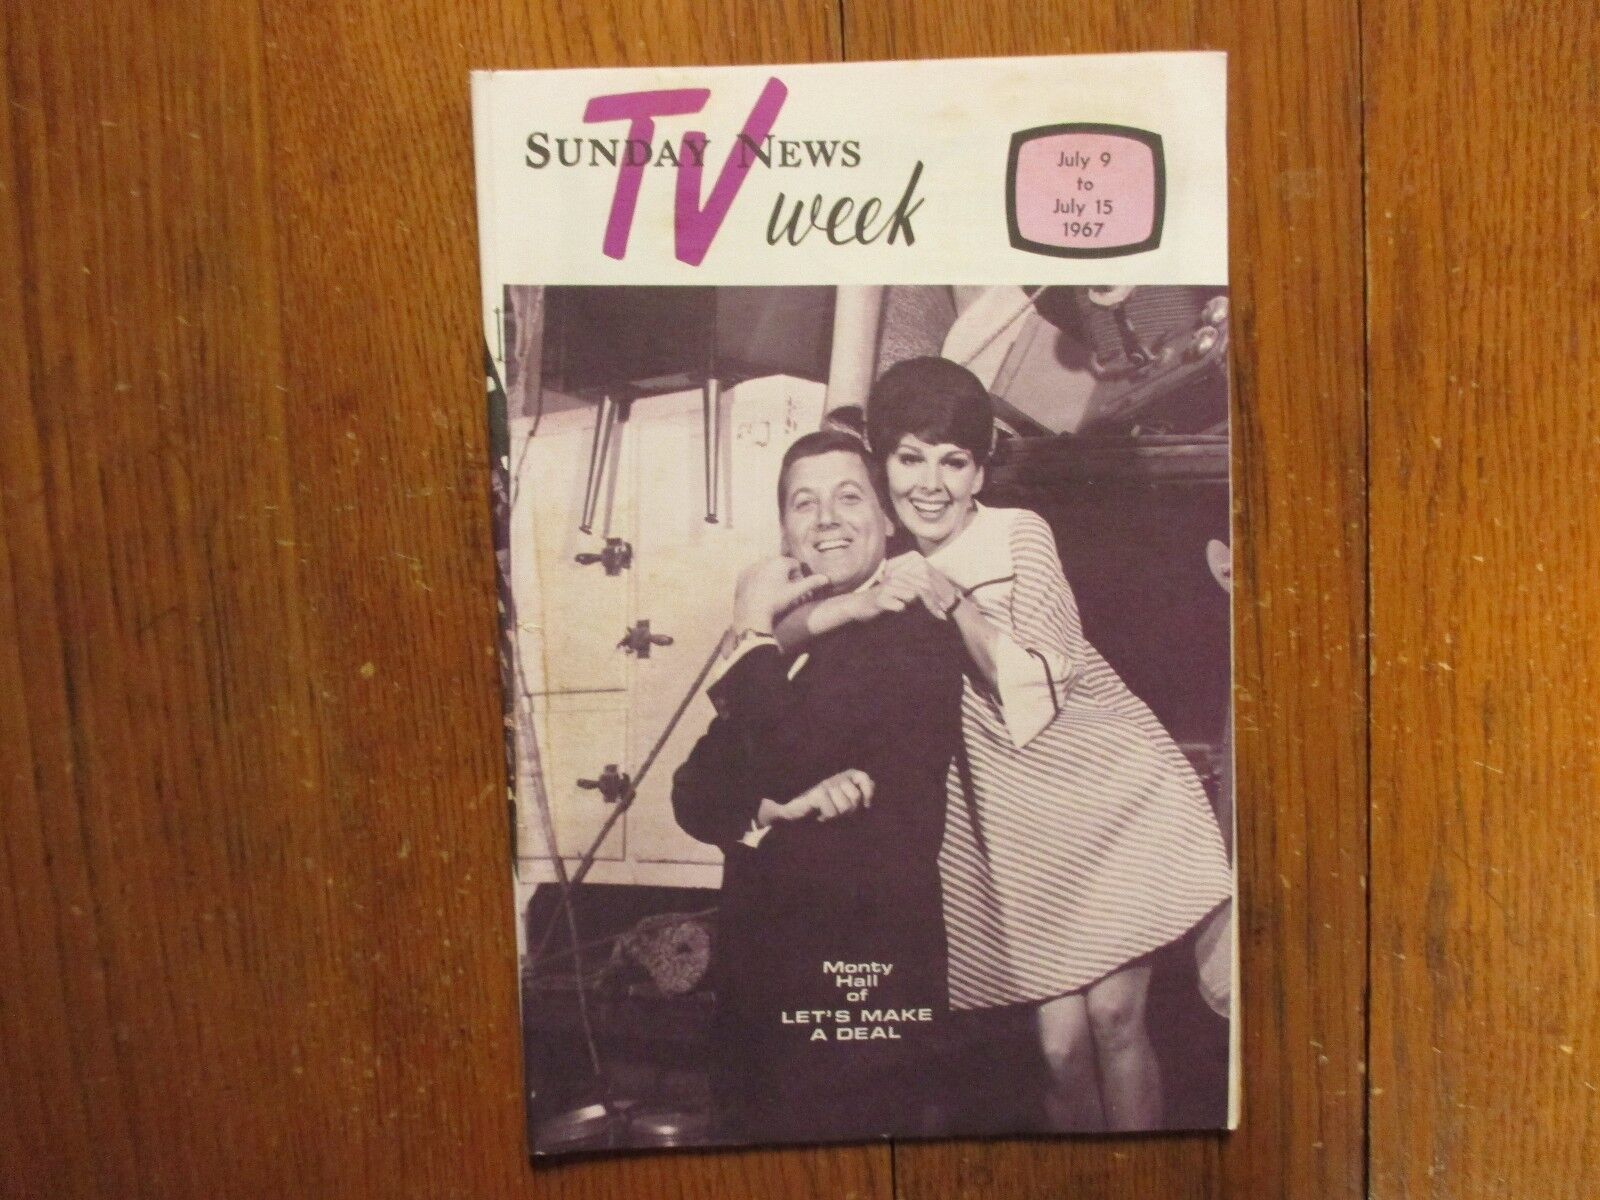 July 9-1967 Lancaster Pa TV Week Maga(MONTY HALL/CAROL MERRILL/LET\'S MAKE A DEAL